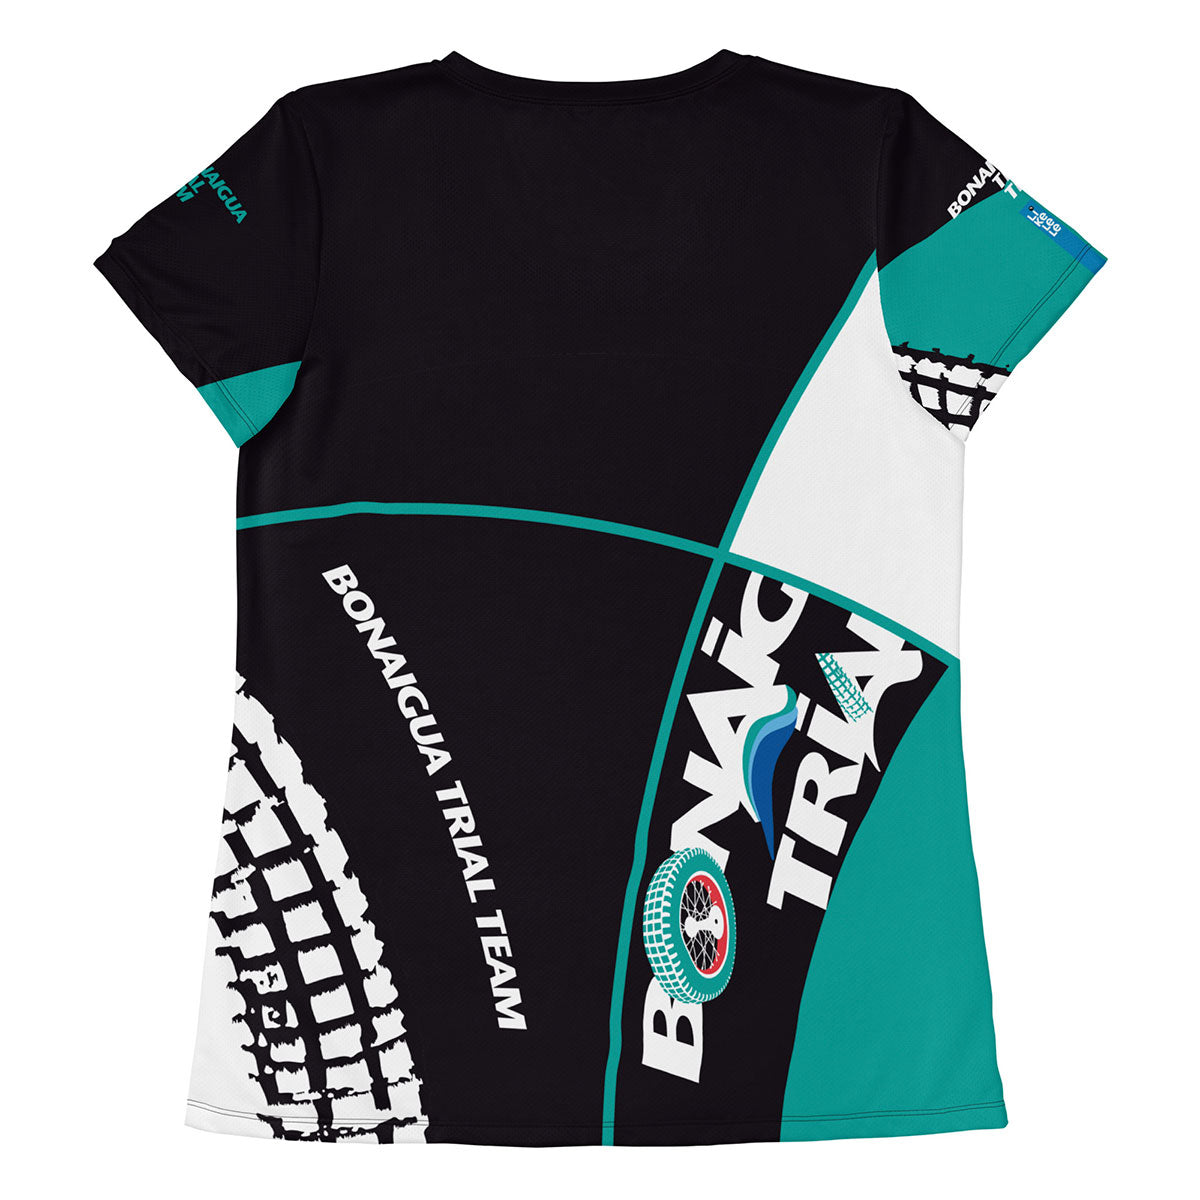 BONAIGUA TRIAL · Camiseta deportiva m/corta·Mujer · Premium·Full Print-248x2ipi